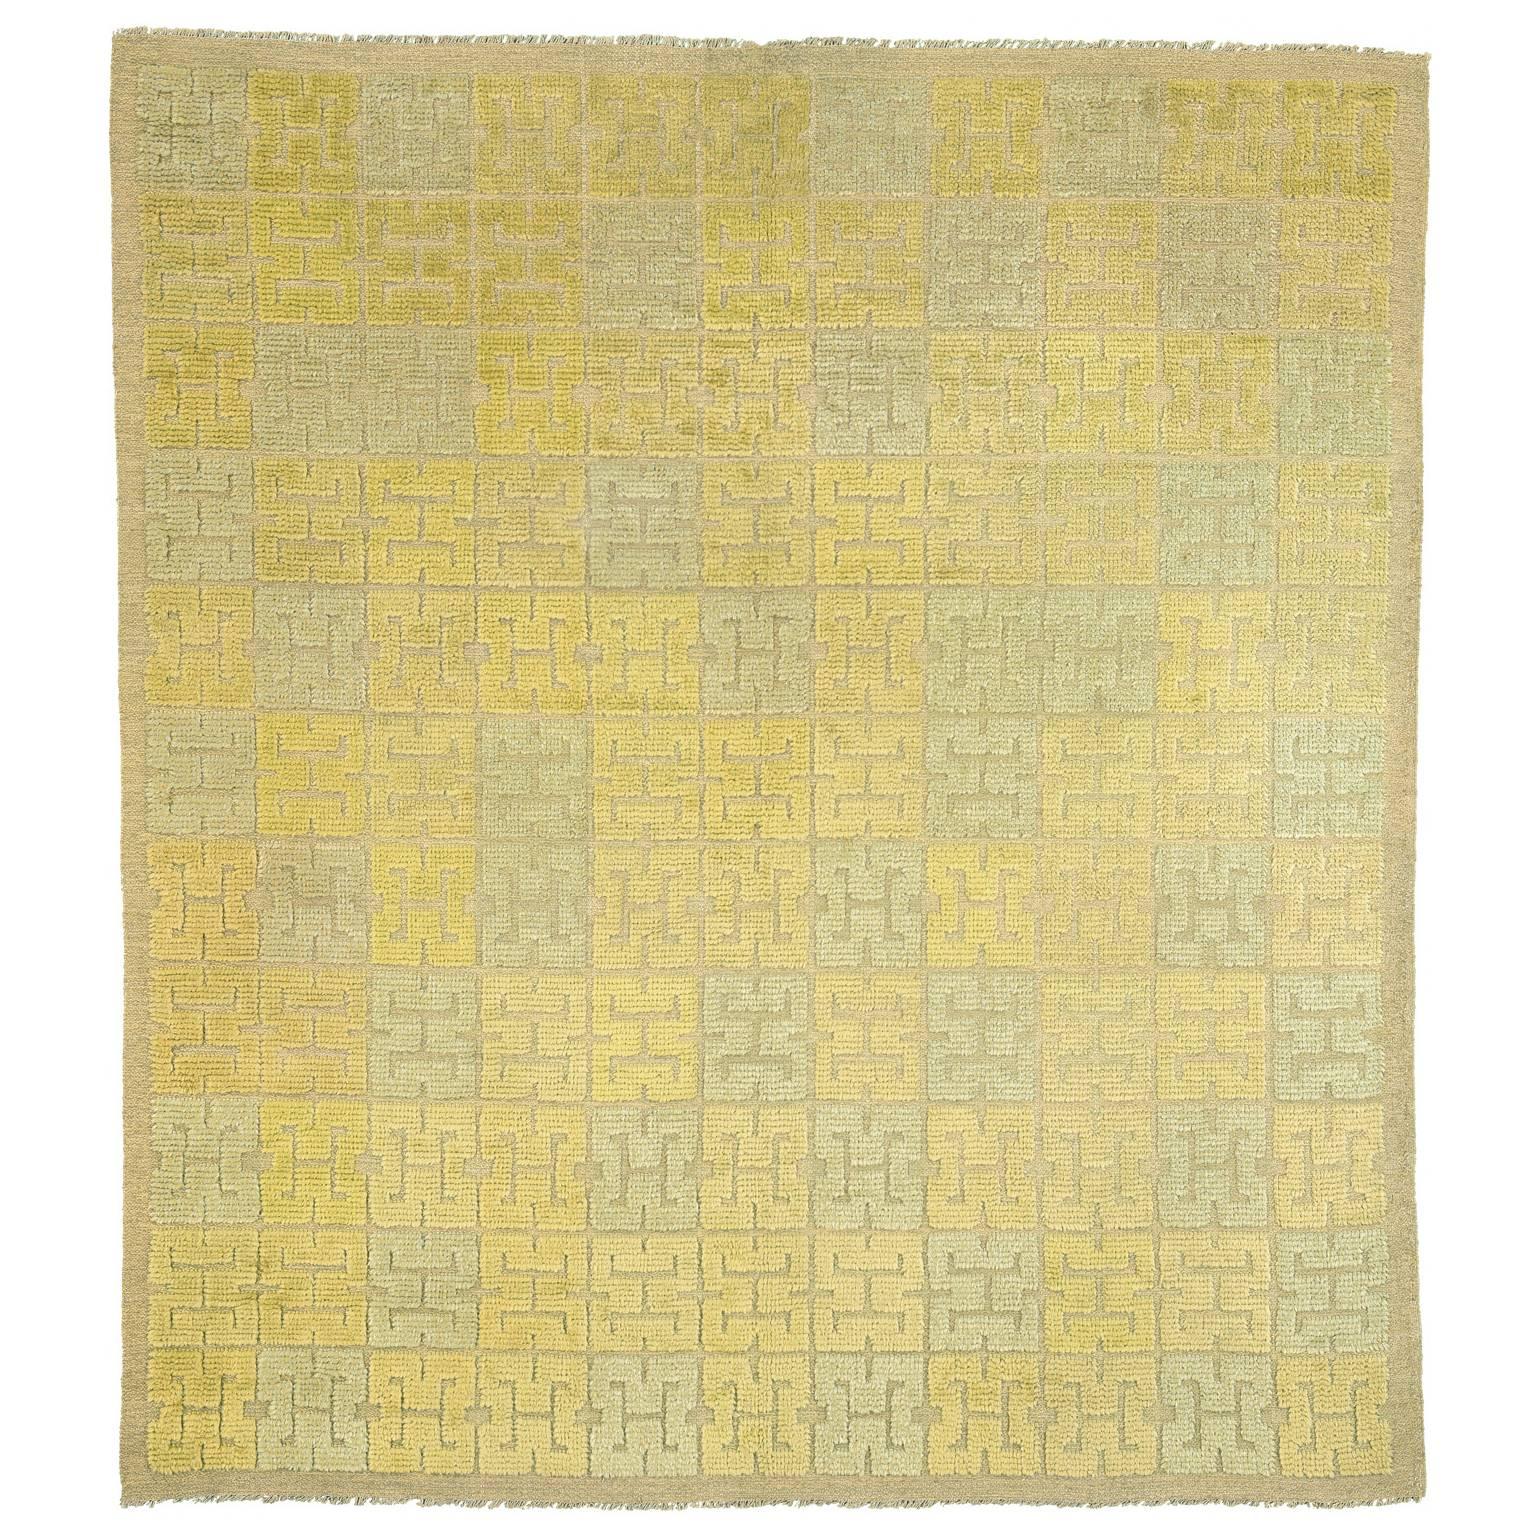 Kinesen "Chinese" 20th Century Swedish Pile-Weave Carpet by Elsa Gullberg